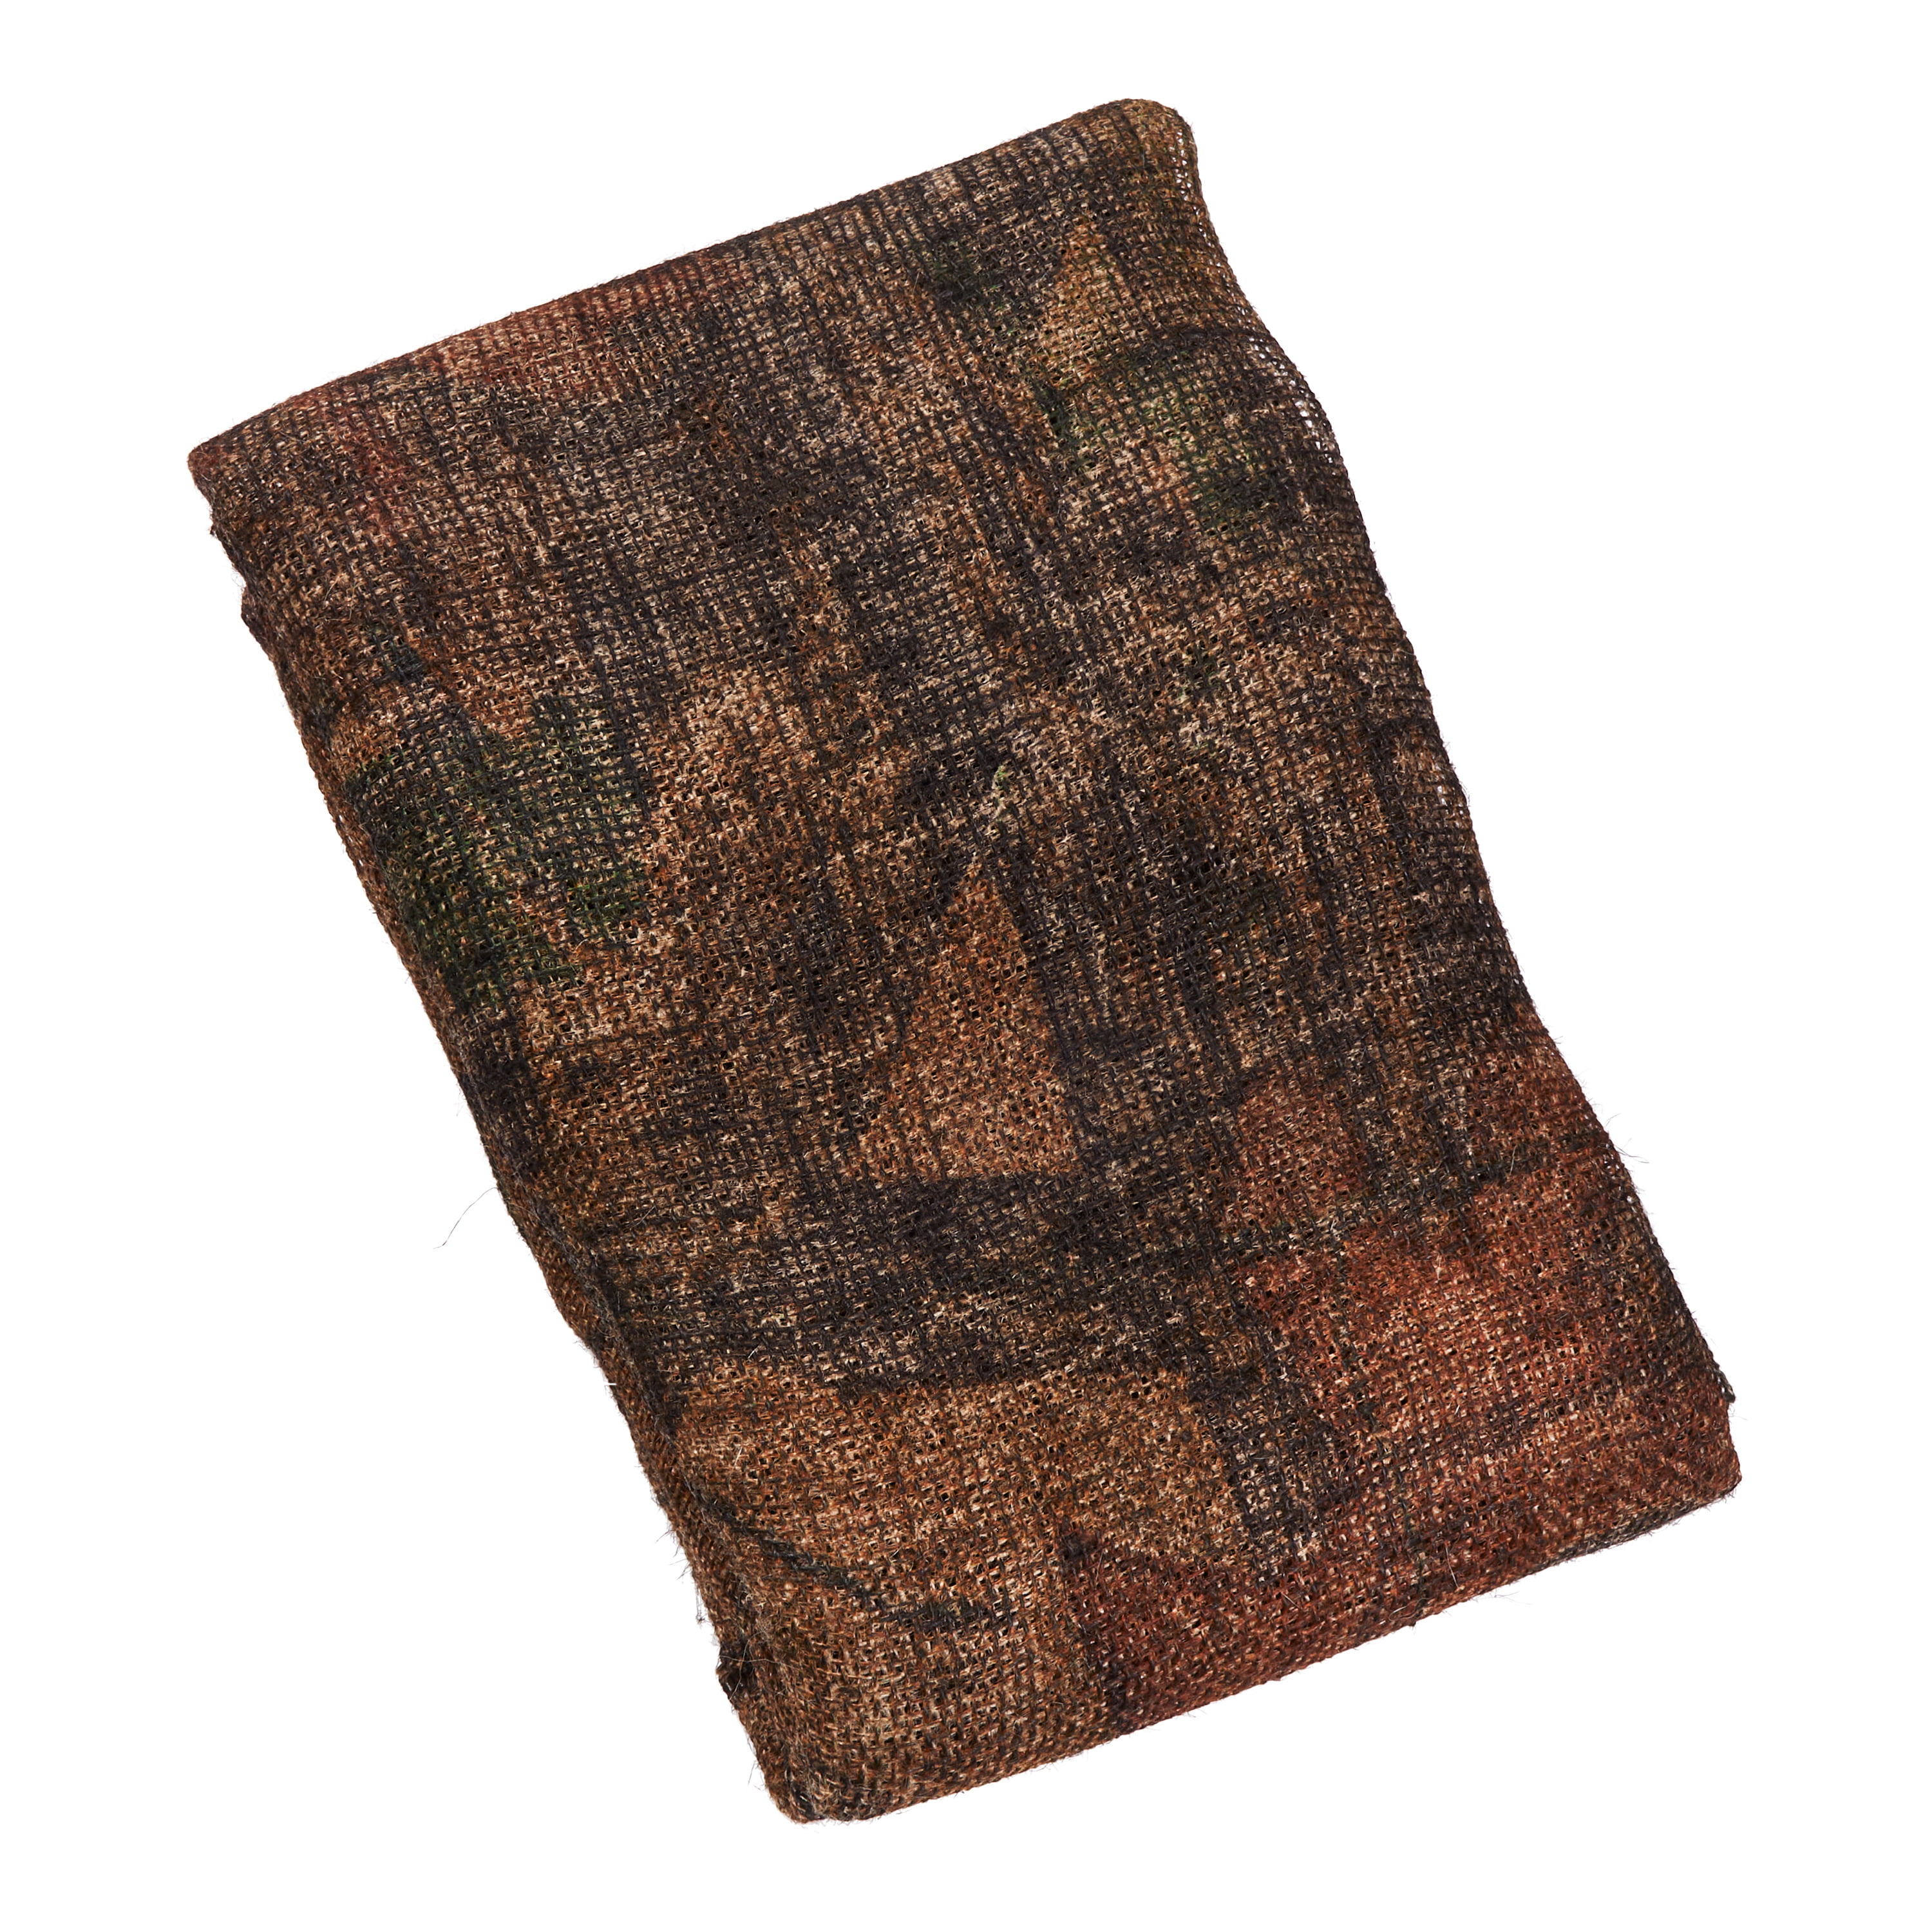 Allen Mossy Oak 3D Camo Omnitex Fabric 12' x 56" Shadow Grass Hunting Blind NEW 